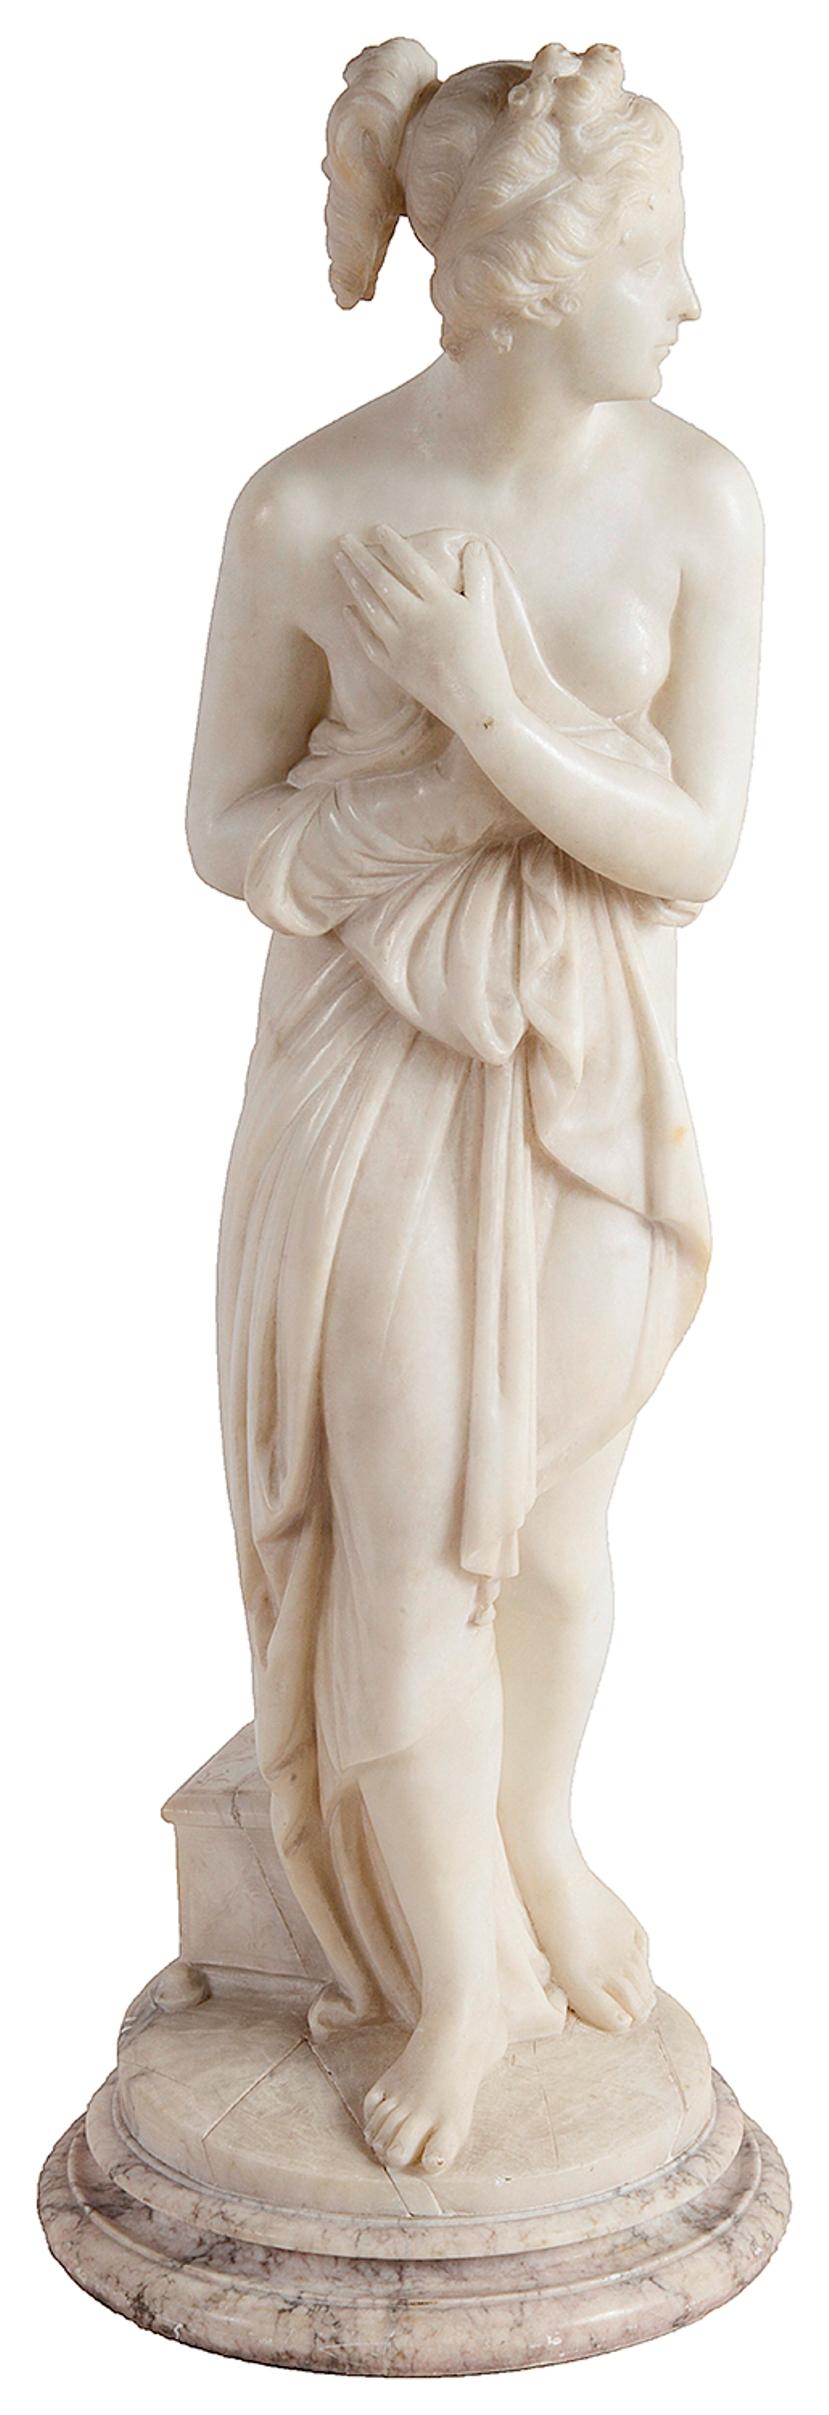 19th Century Marble statue of Venus Au Bain, 74cm(29")high